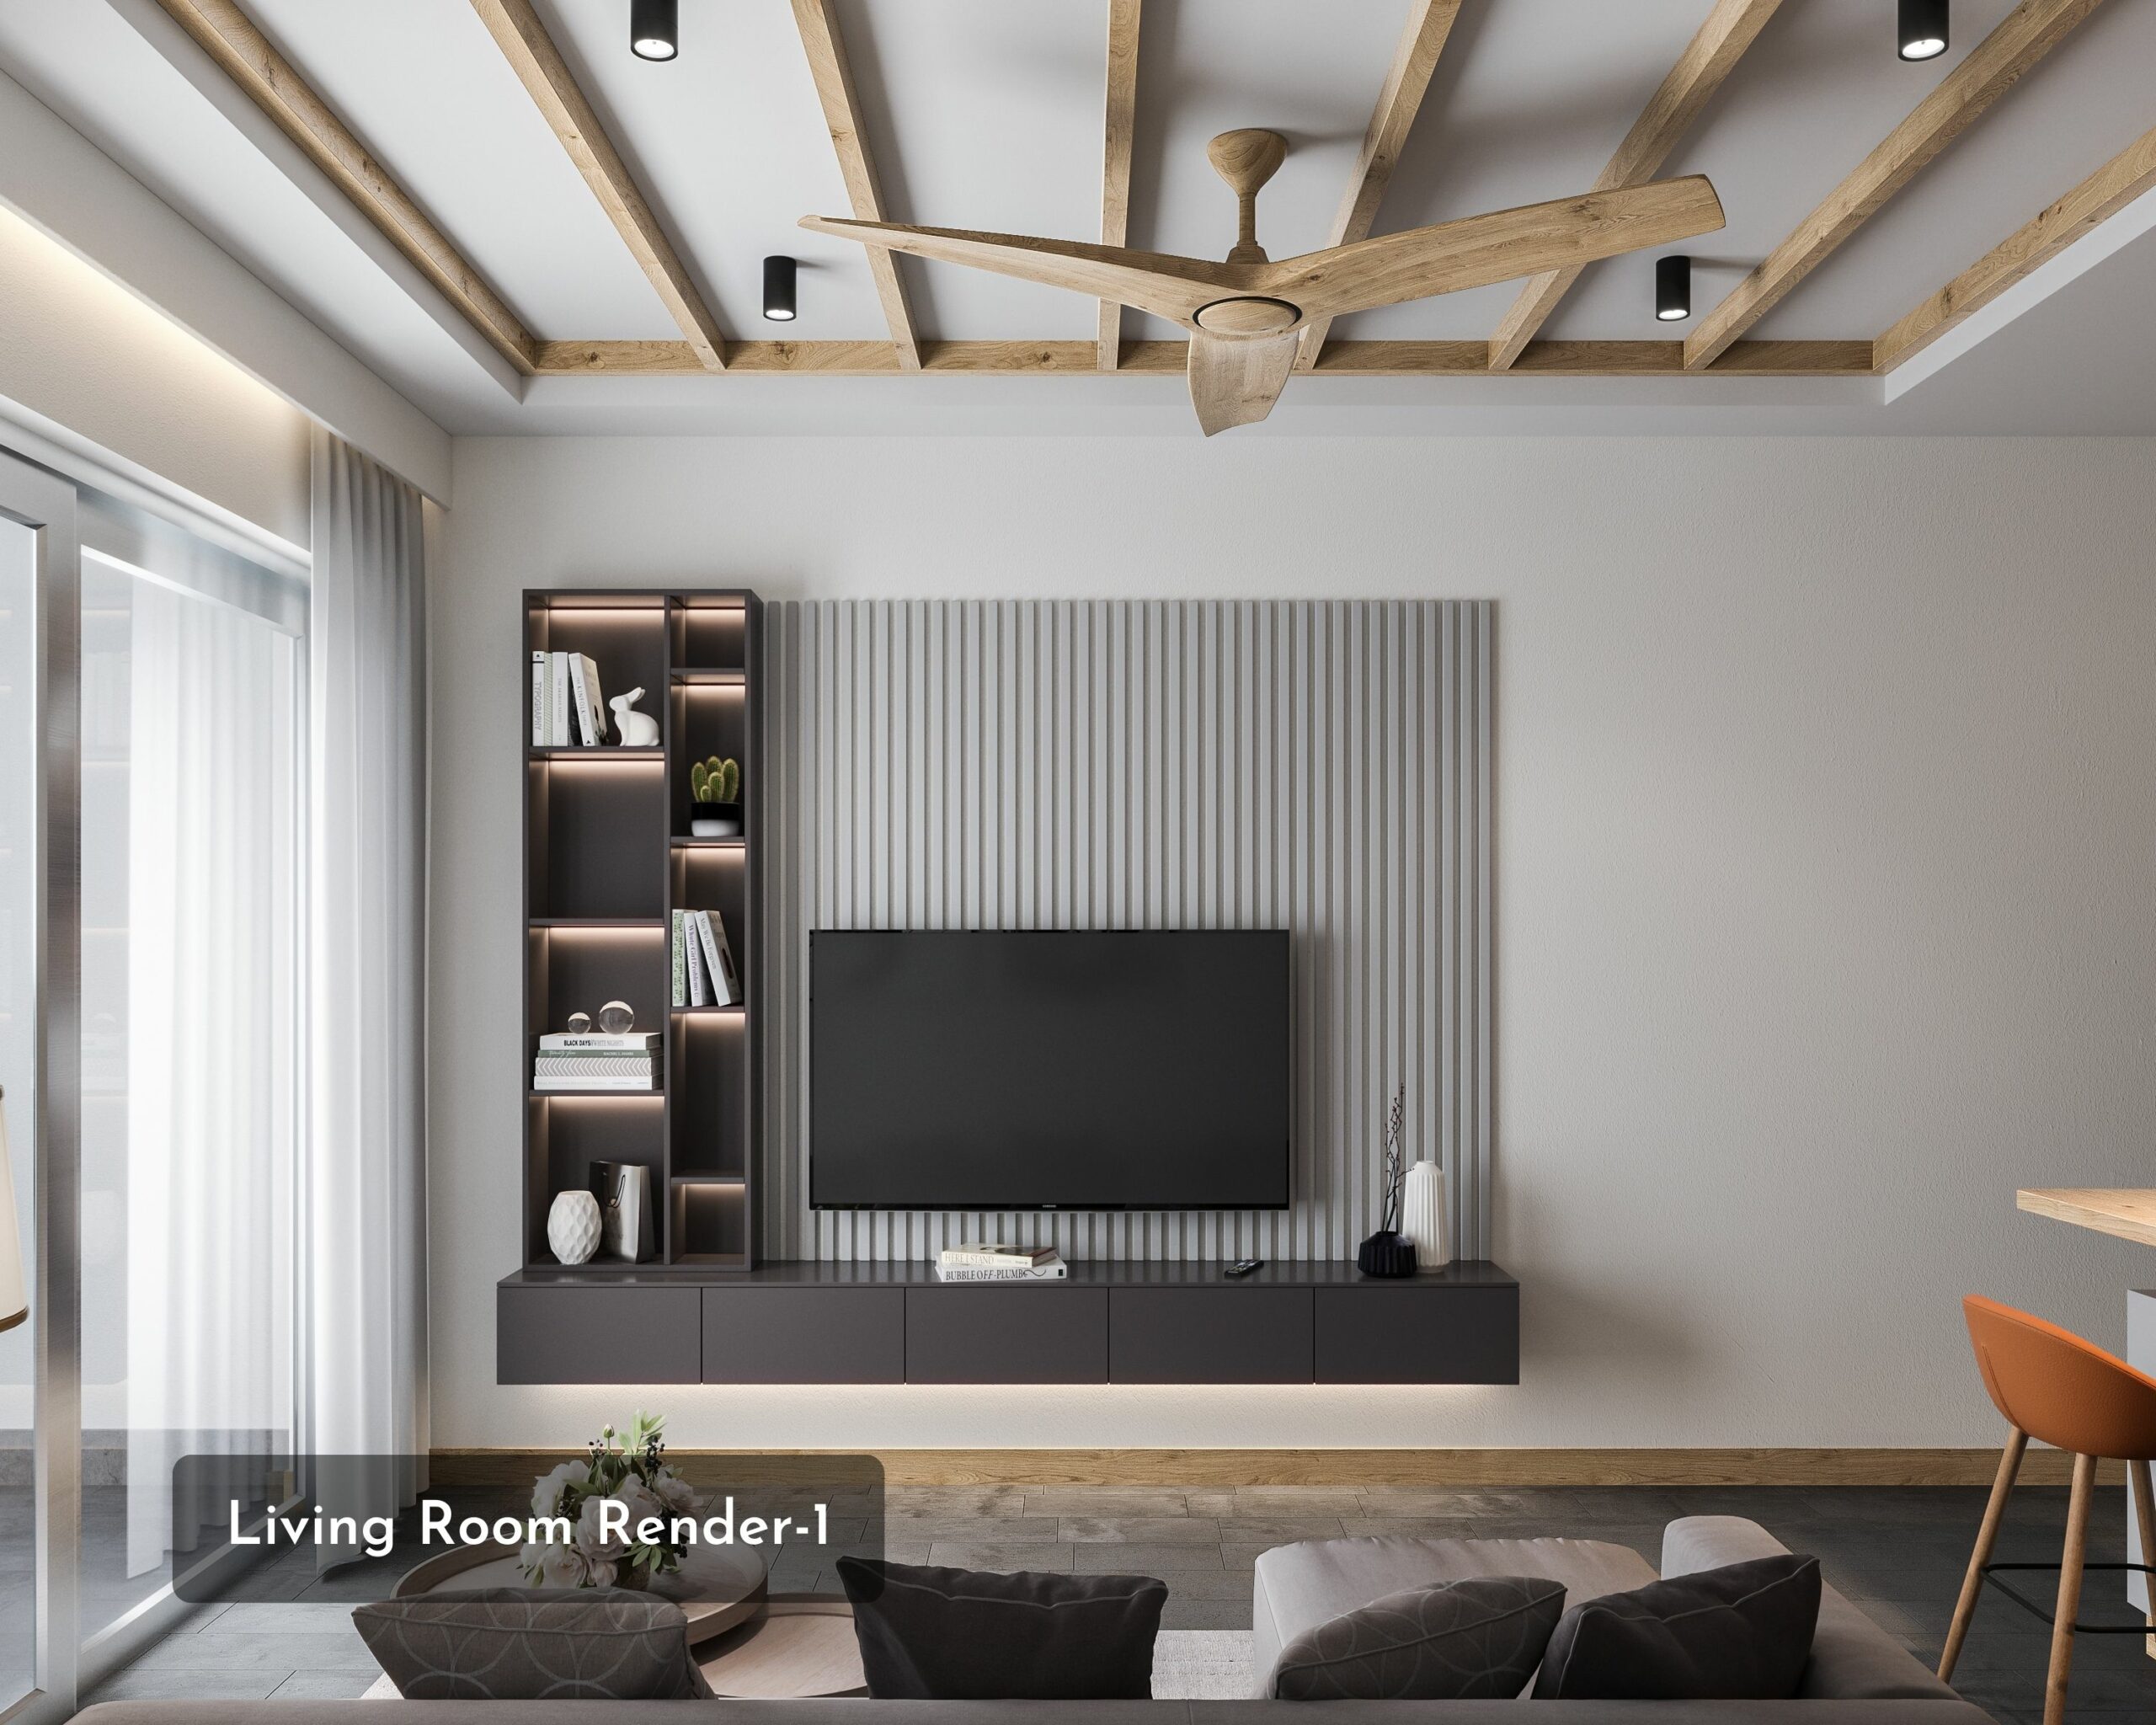 Living Room Render-1